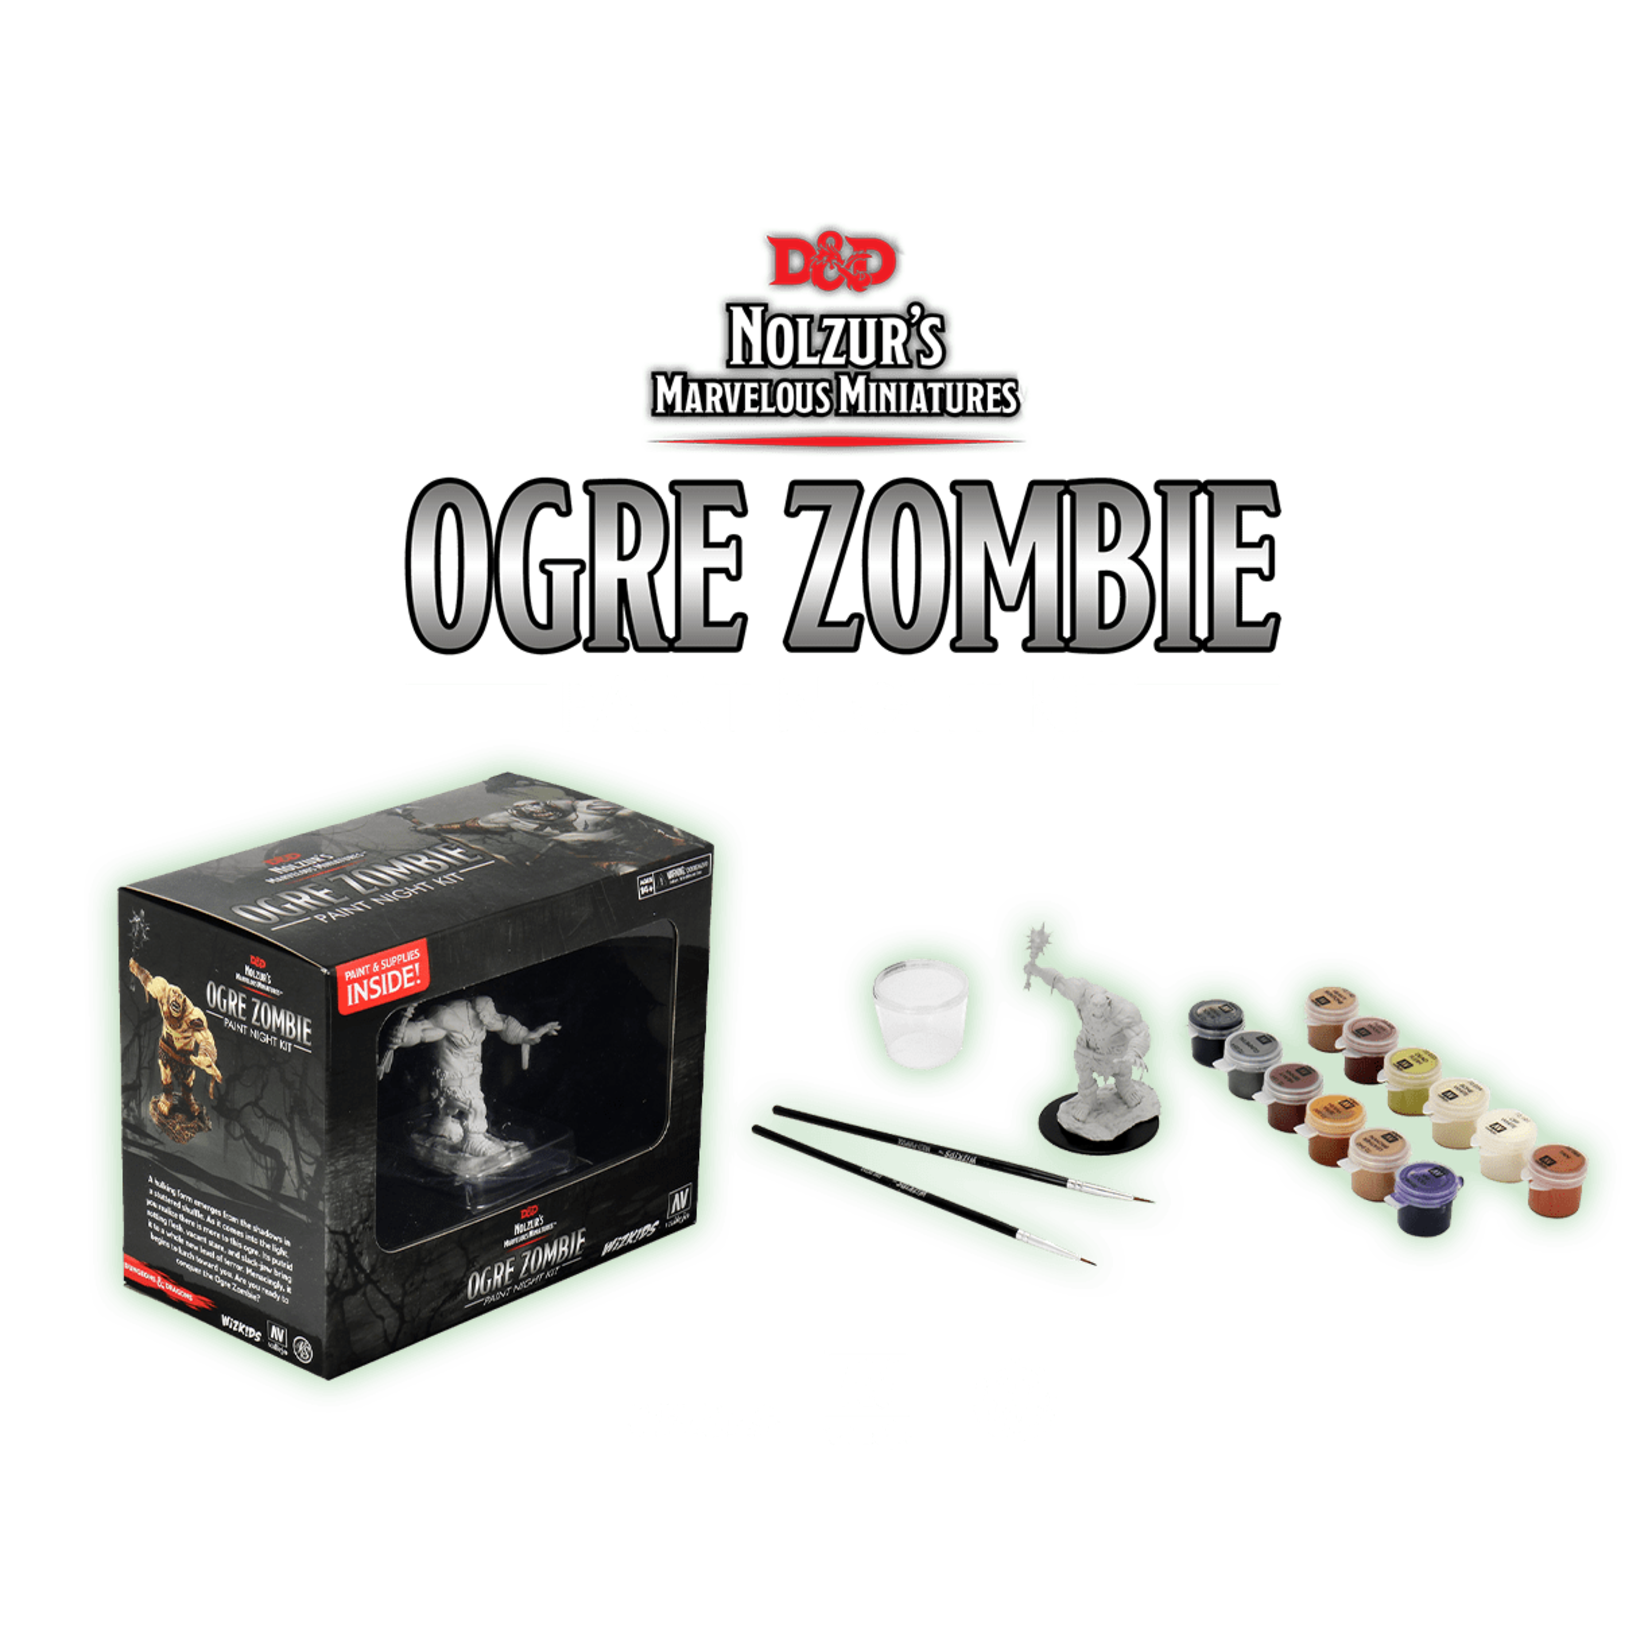 WizKids/Neca 90135 Nolzur's: Ogre Zombie Paint Night 5 Kit